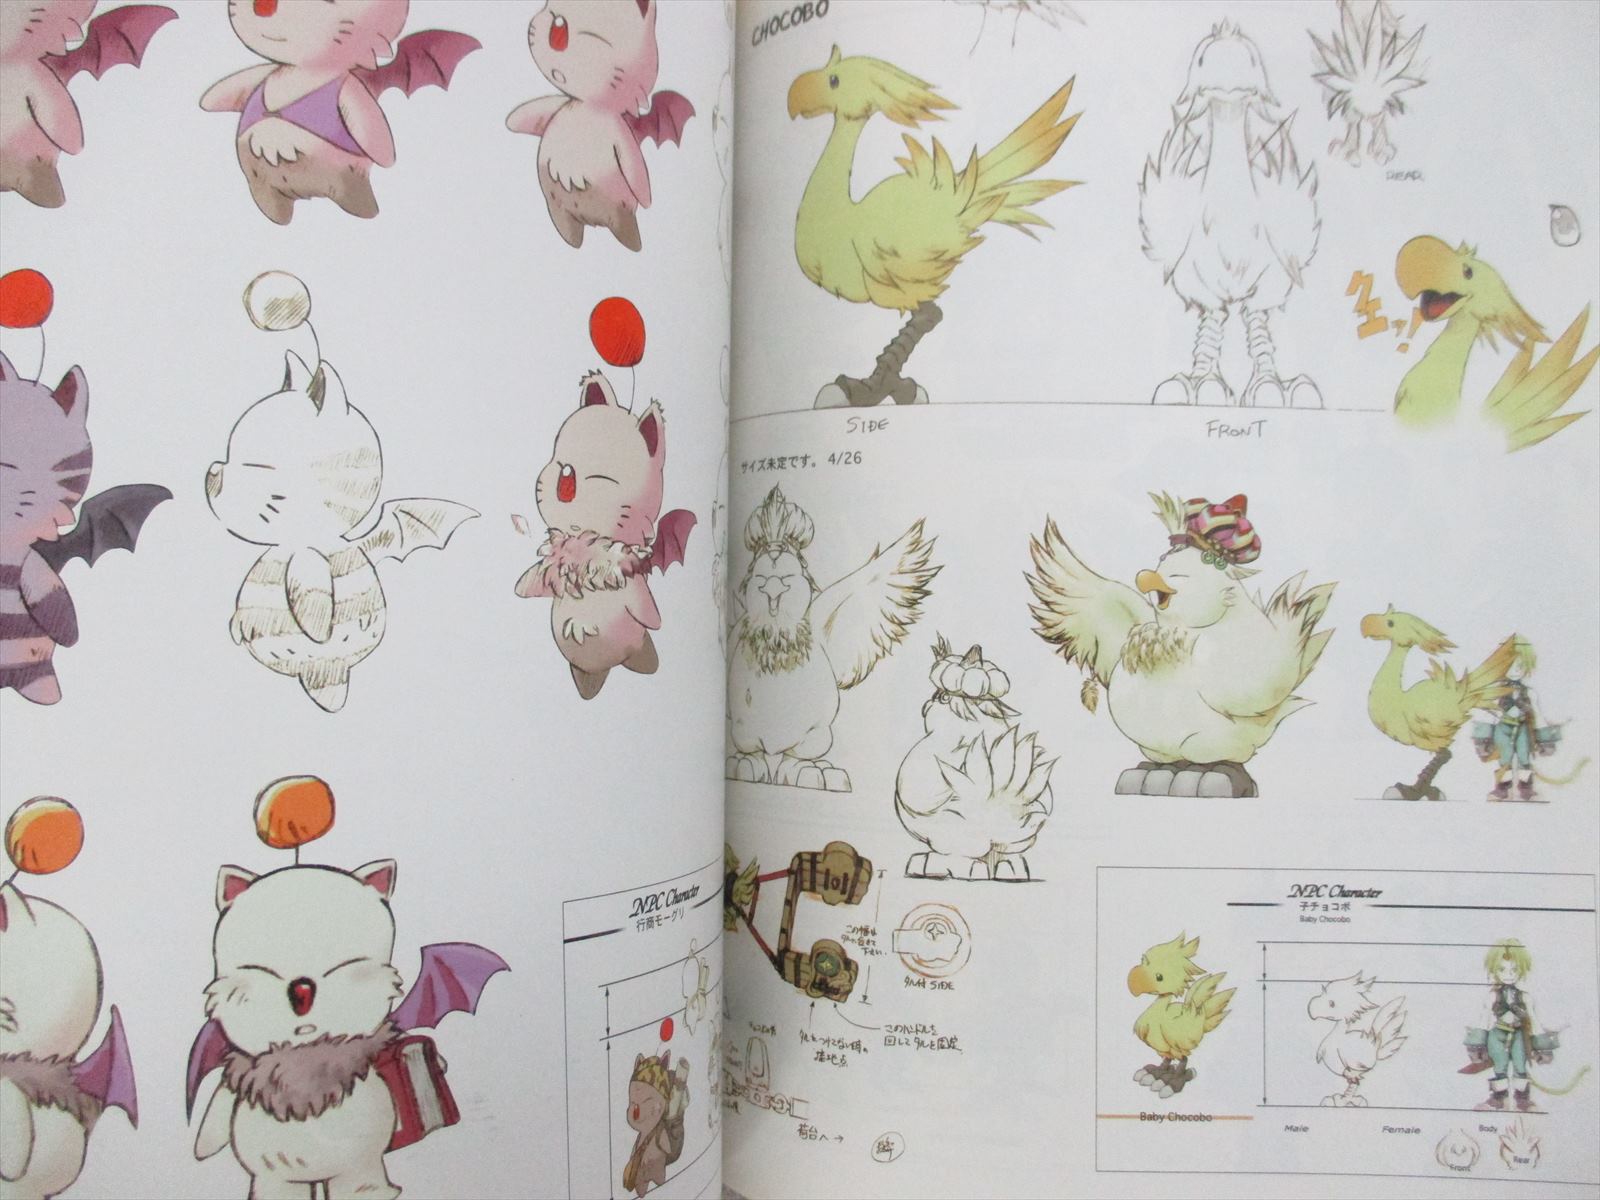 Final Fantasy Ix 9 W Poster Art Works Game Guide Fan Book Ps 00 Vj Ebay